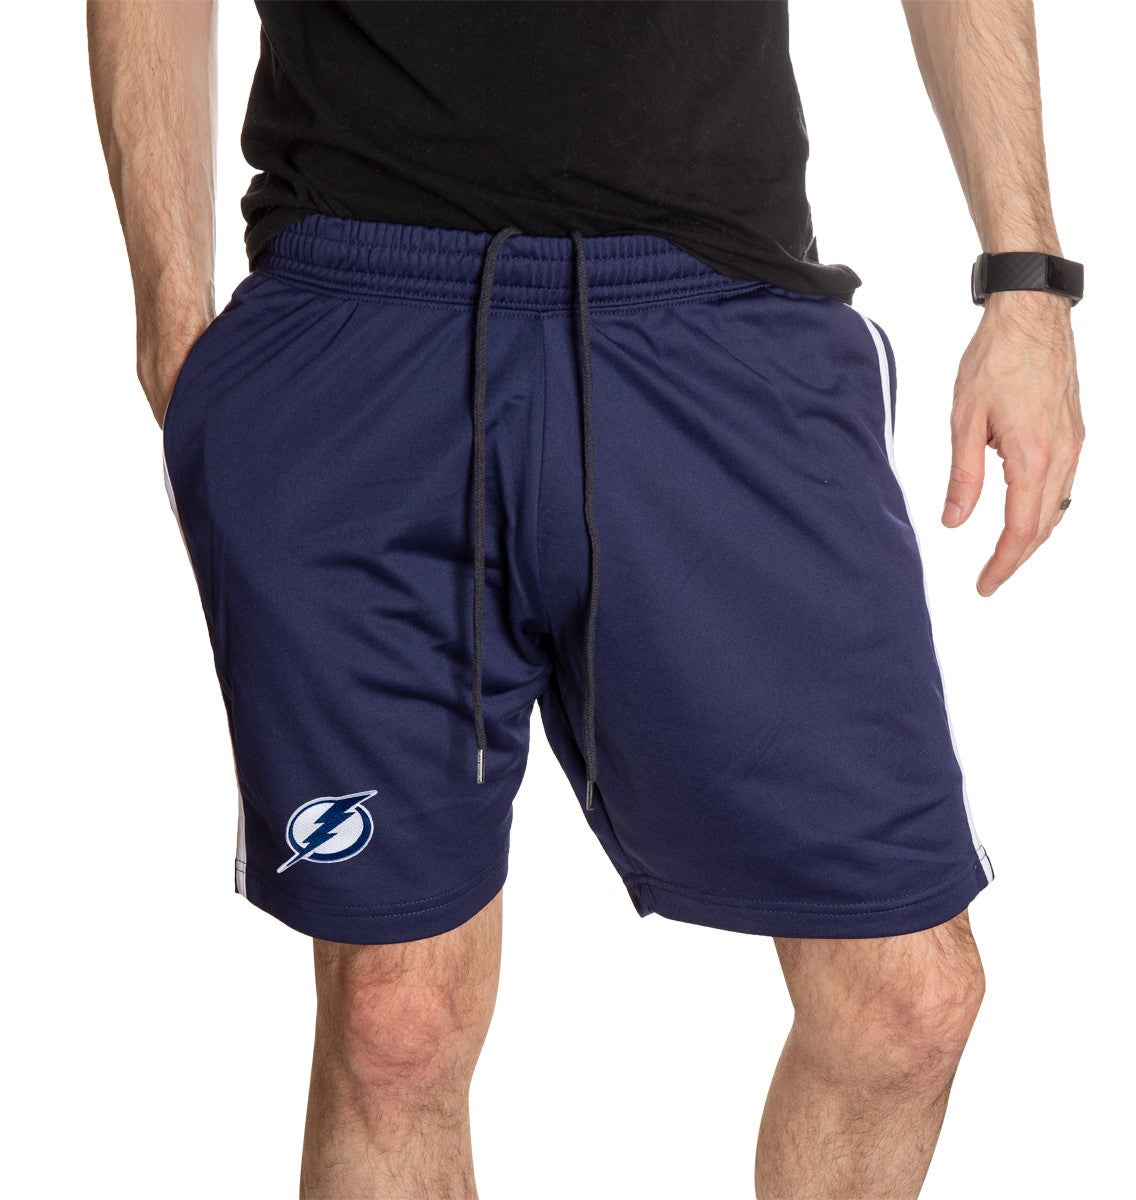 Tampa Bay Lightning Two-Stripe Shorts for Men